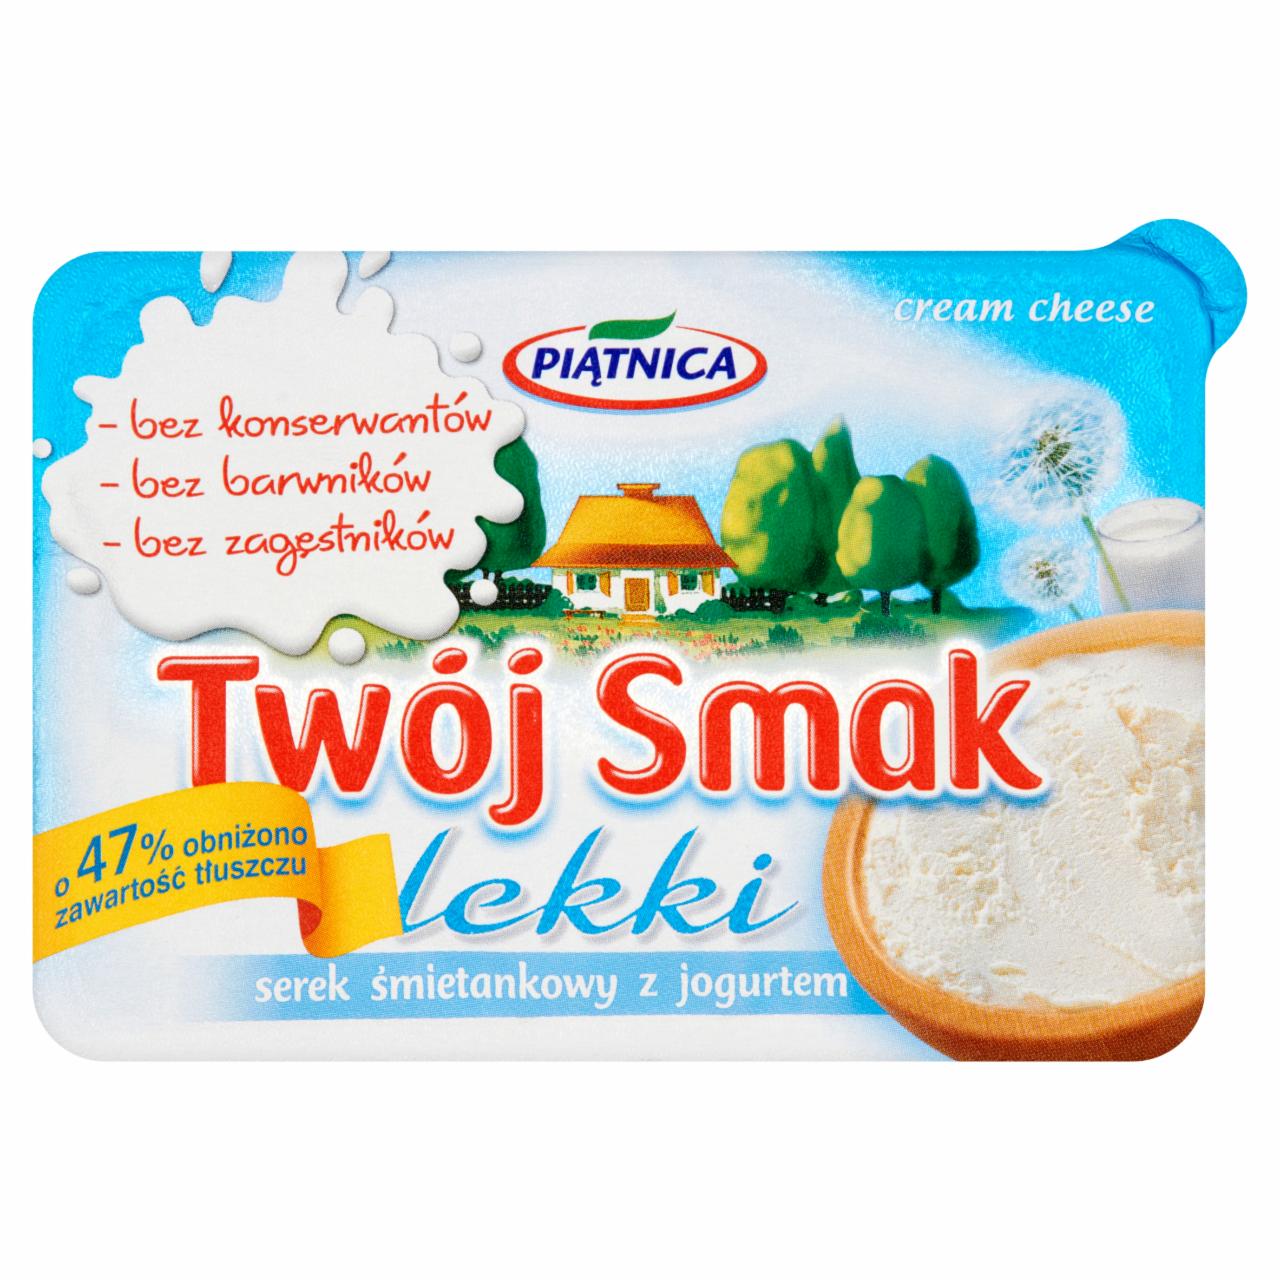 Photo - Piątnica Twój Smak lekki Cream Cheese with Yoghurt 135 g